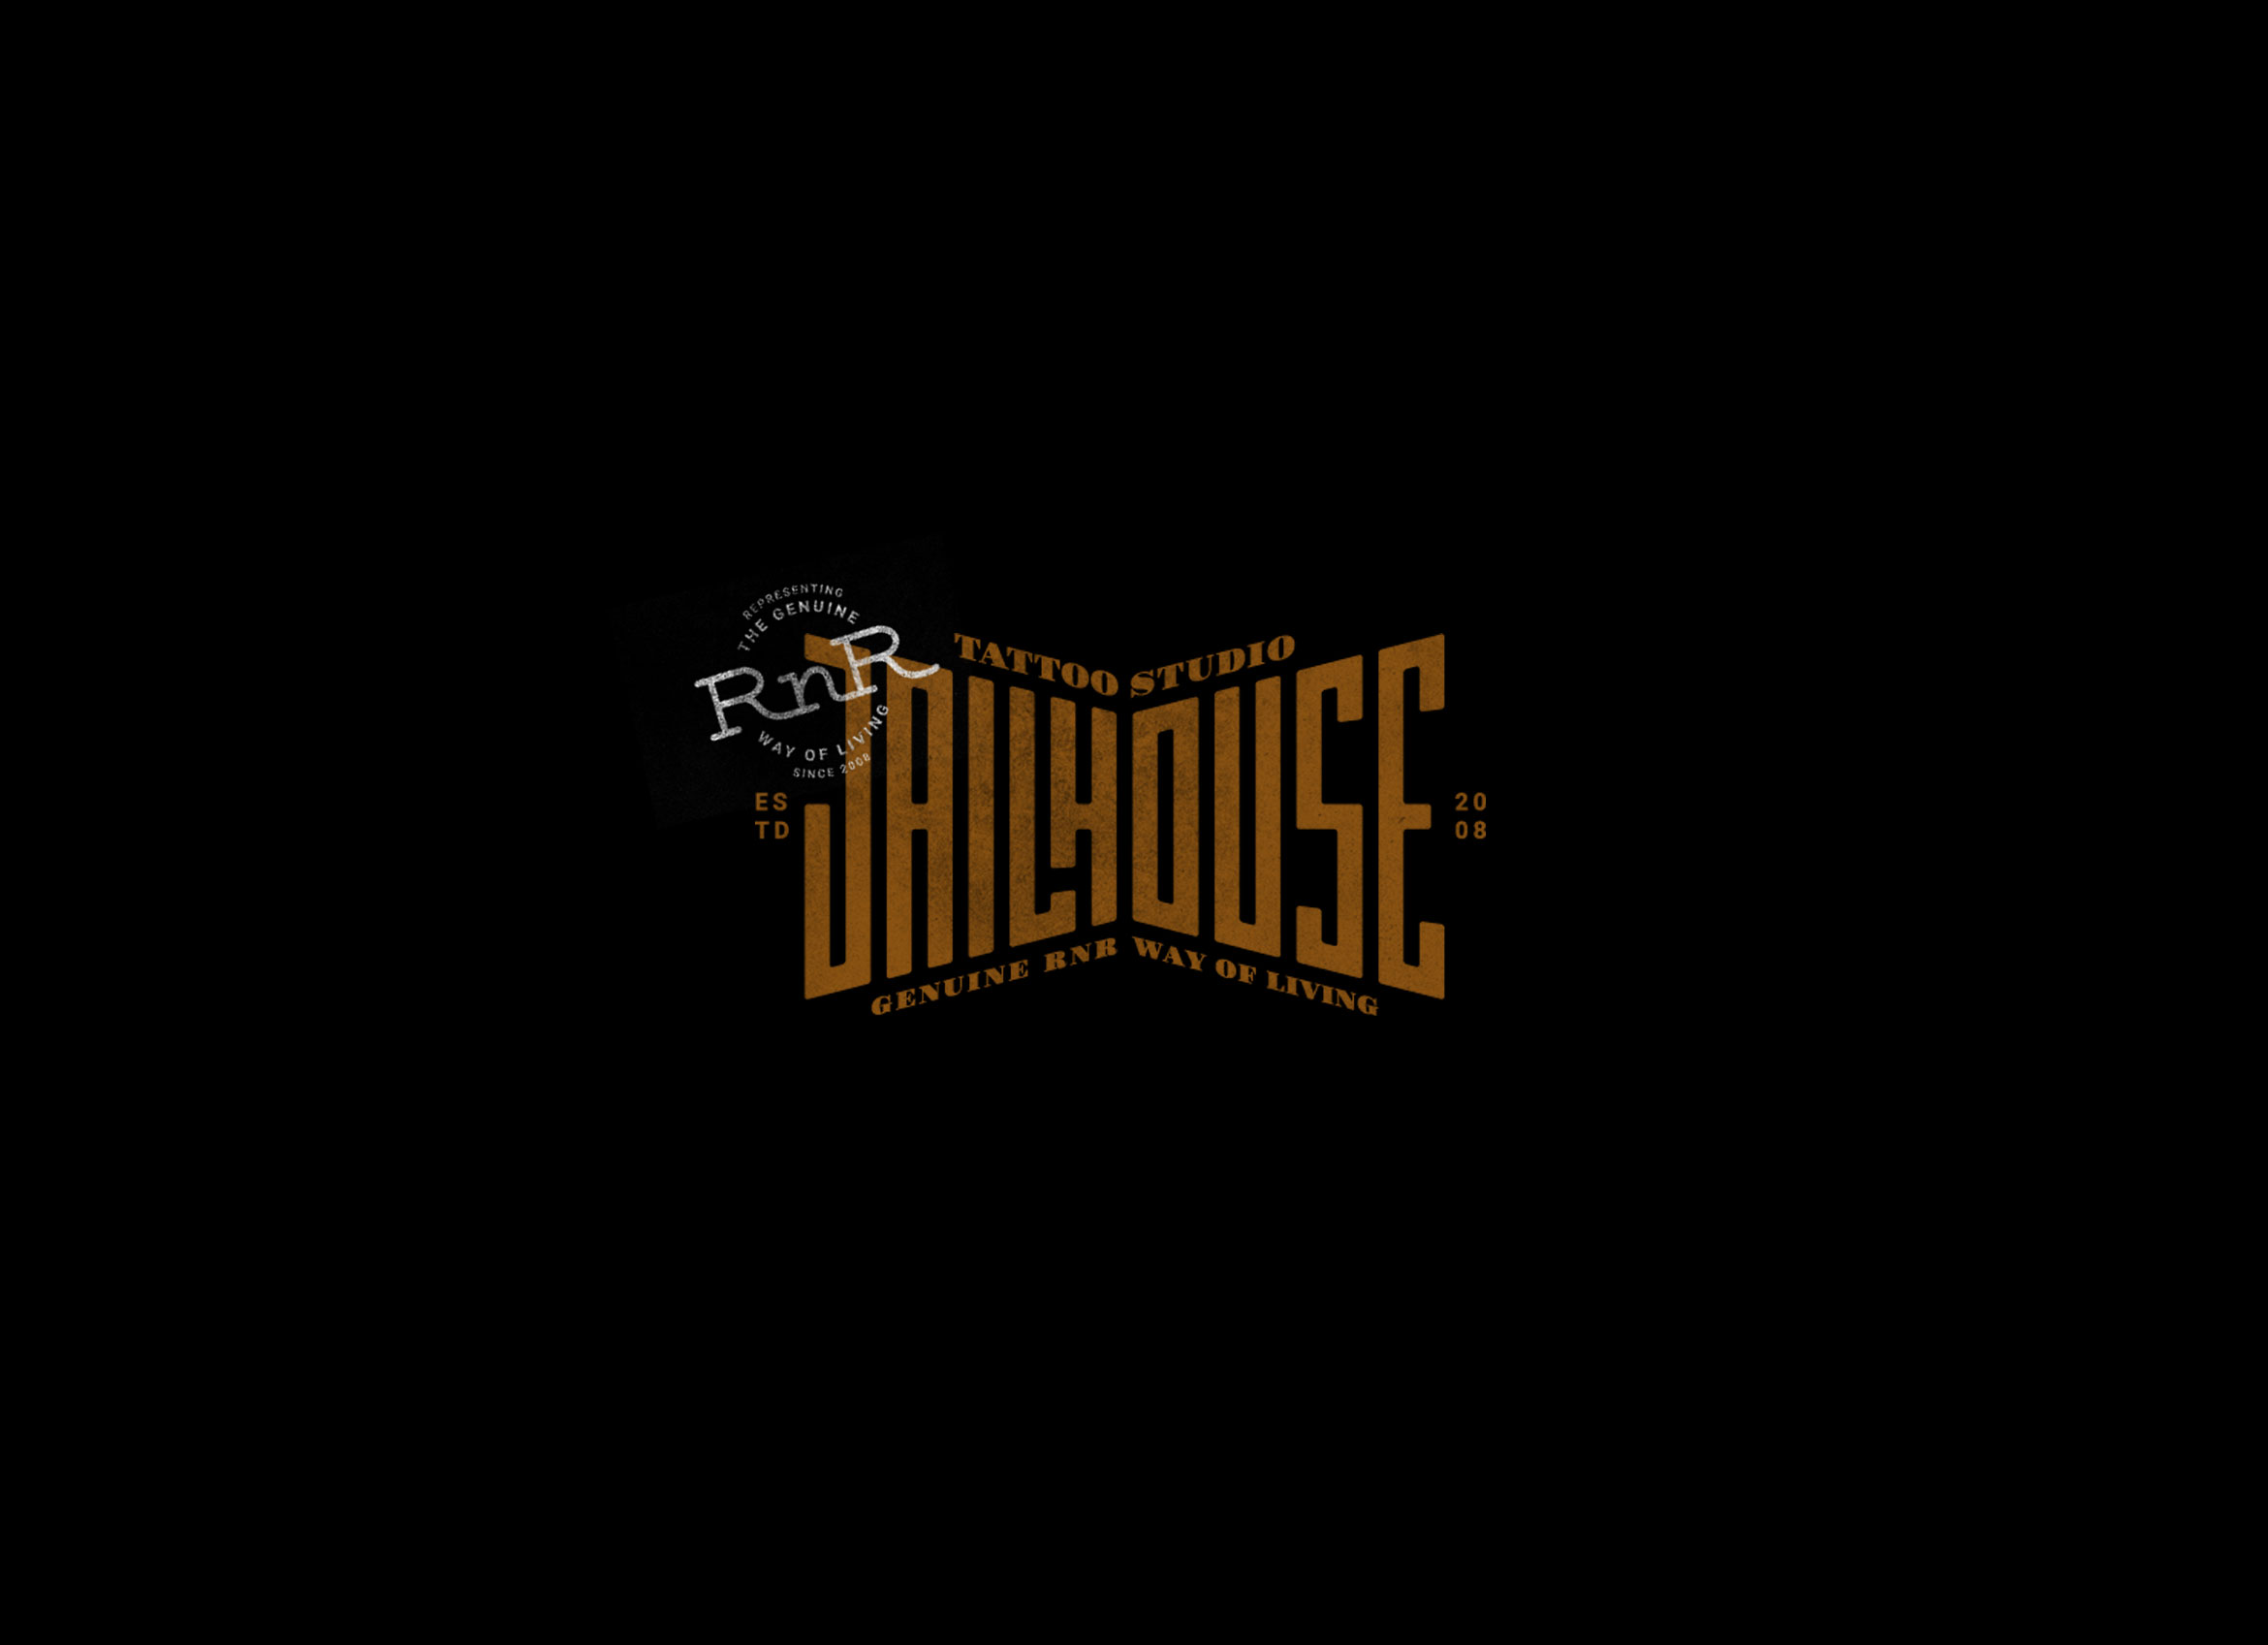 Jailhouse logotype